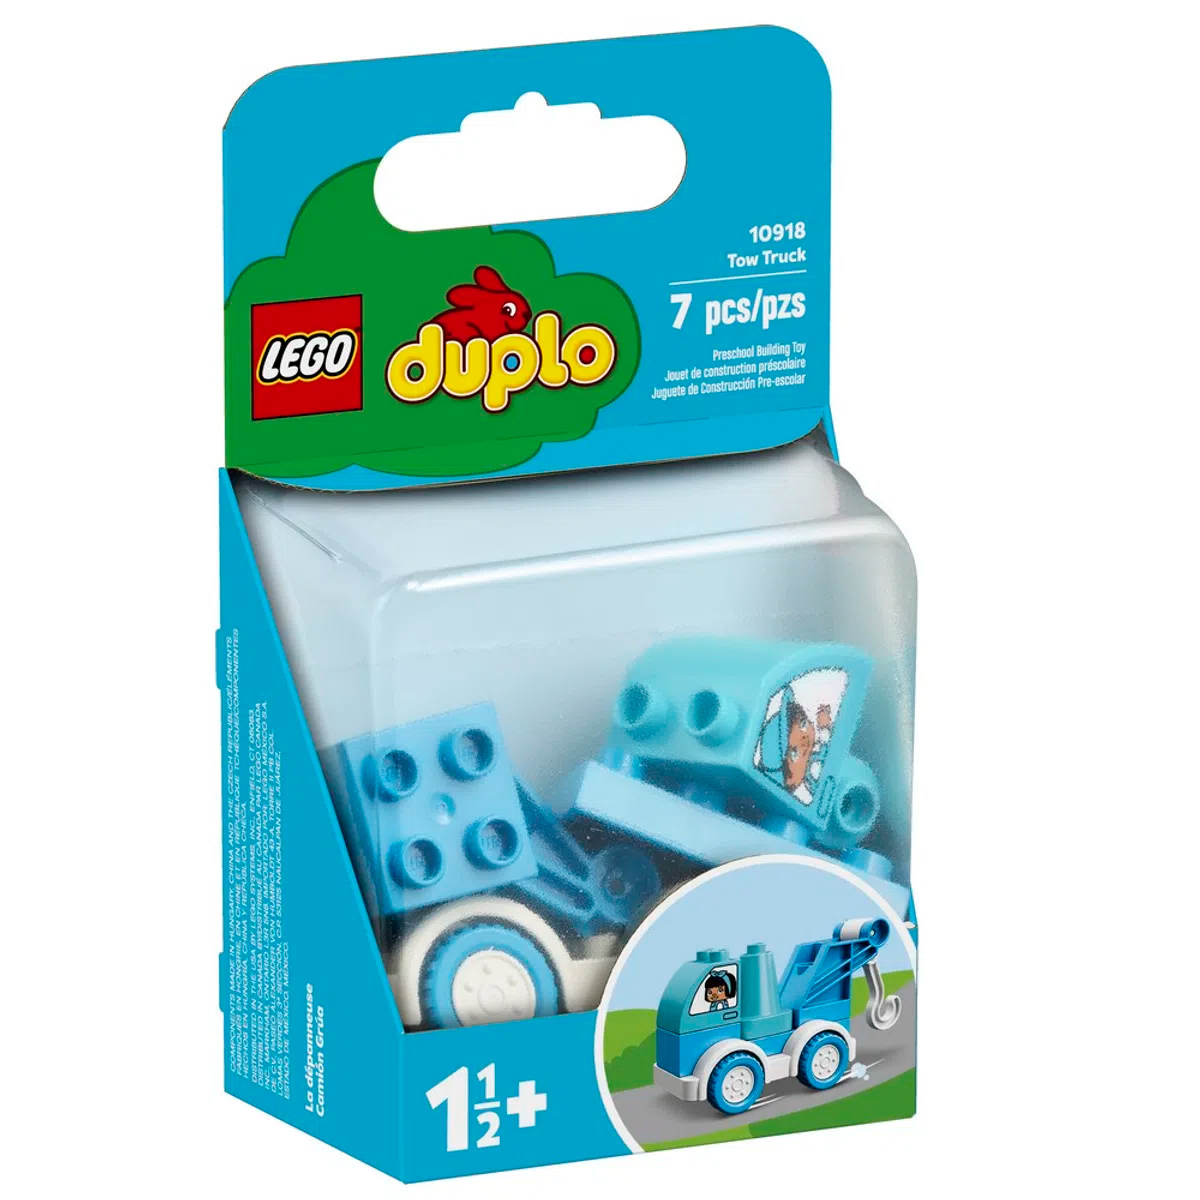 LEGO Duplo - Caminhao de Reboque - 10918